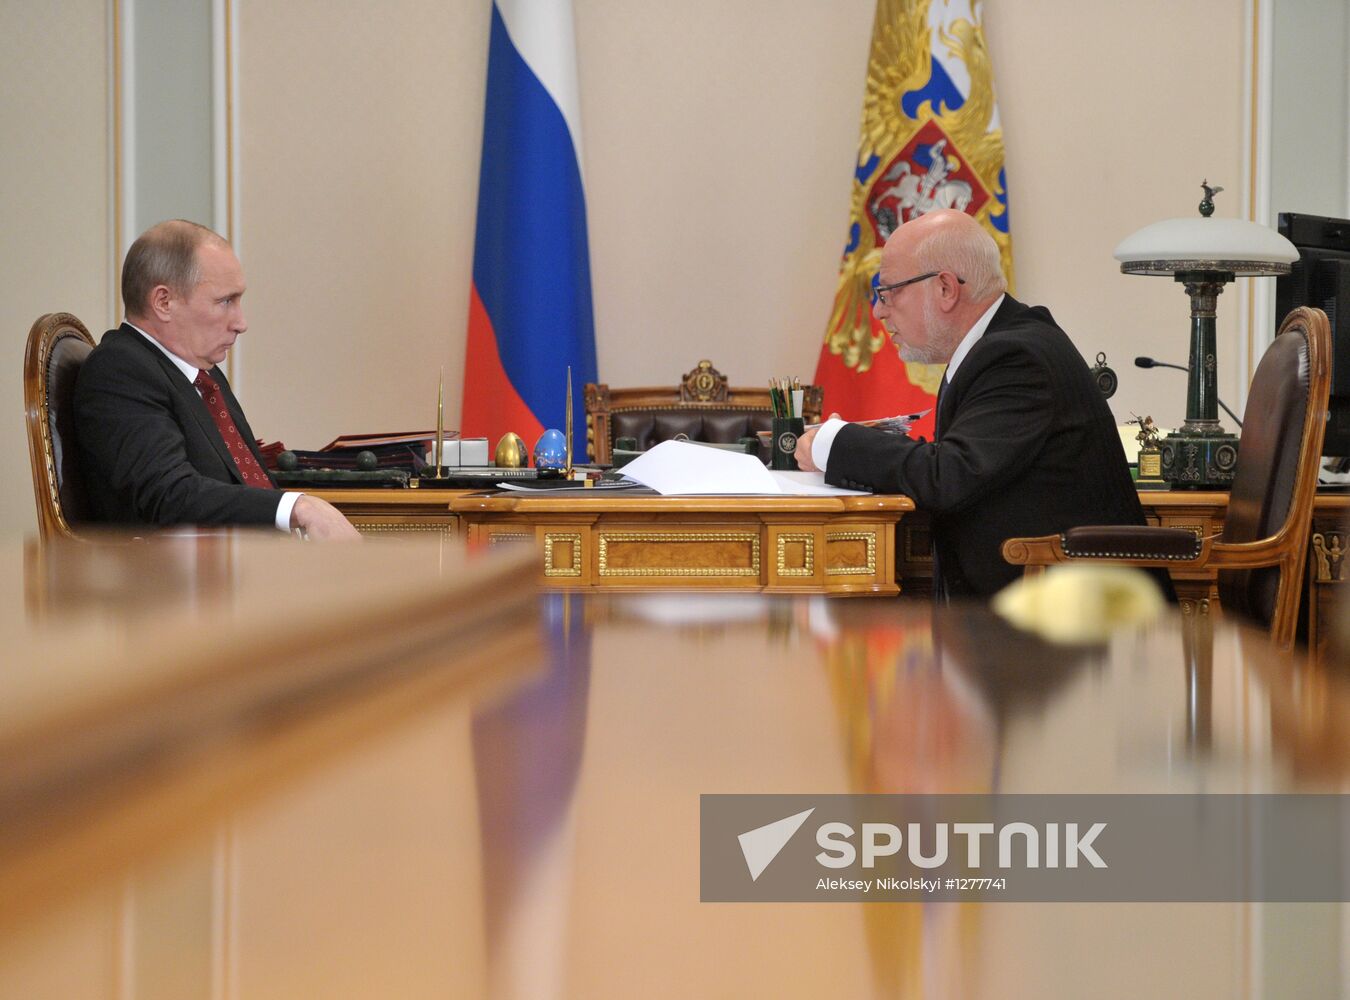 Vladimir Putin meets with Mikhail Fedotov